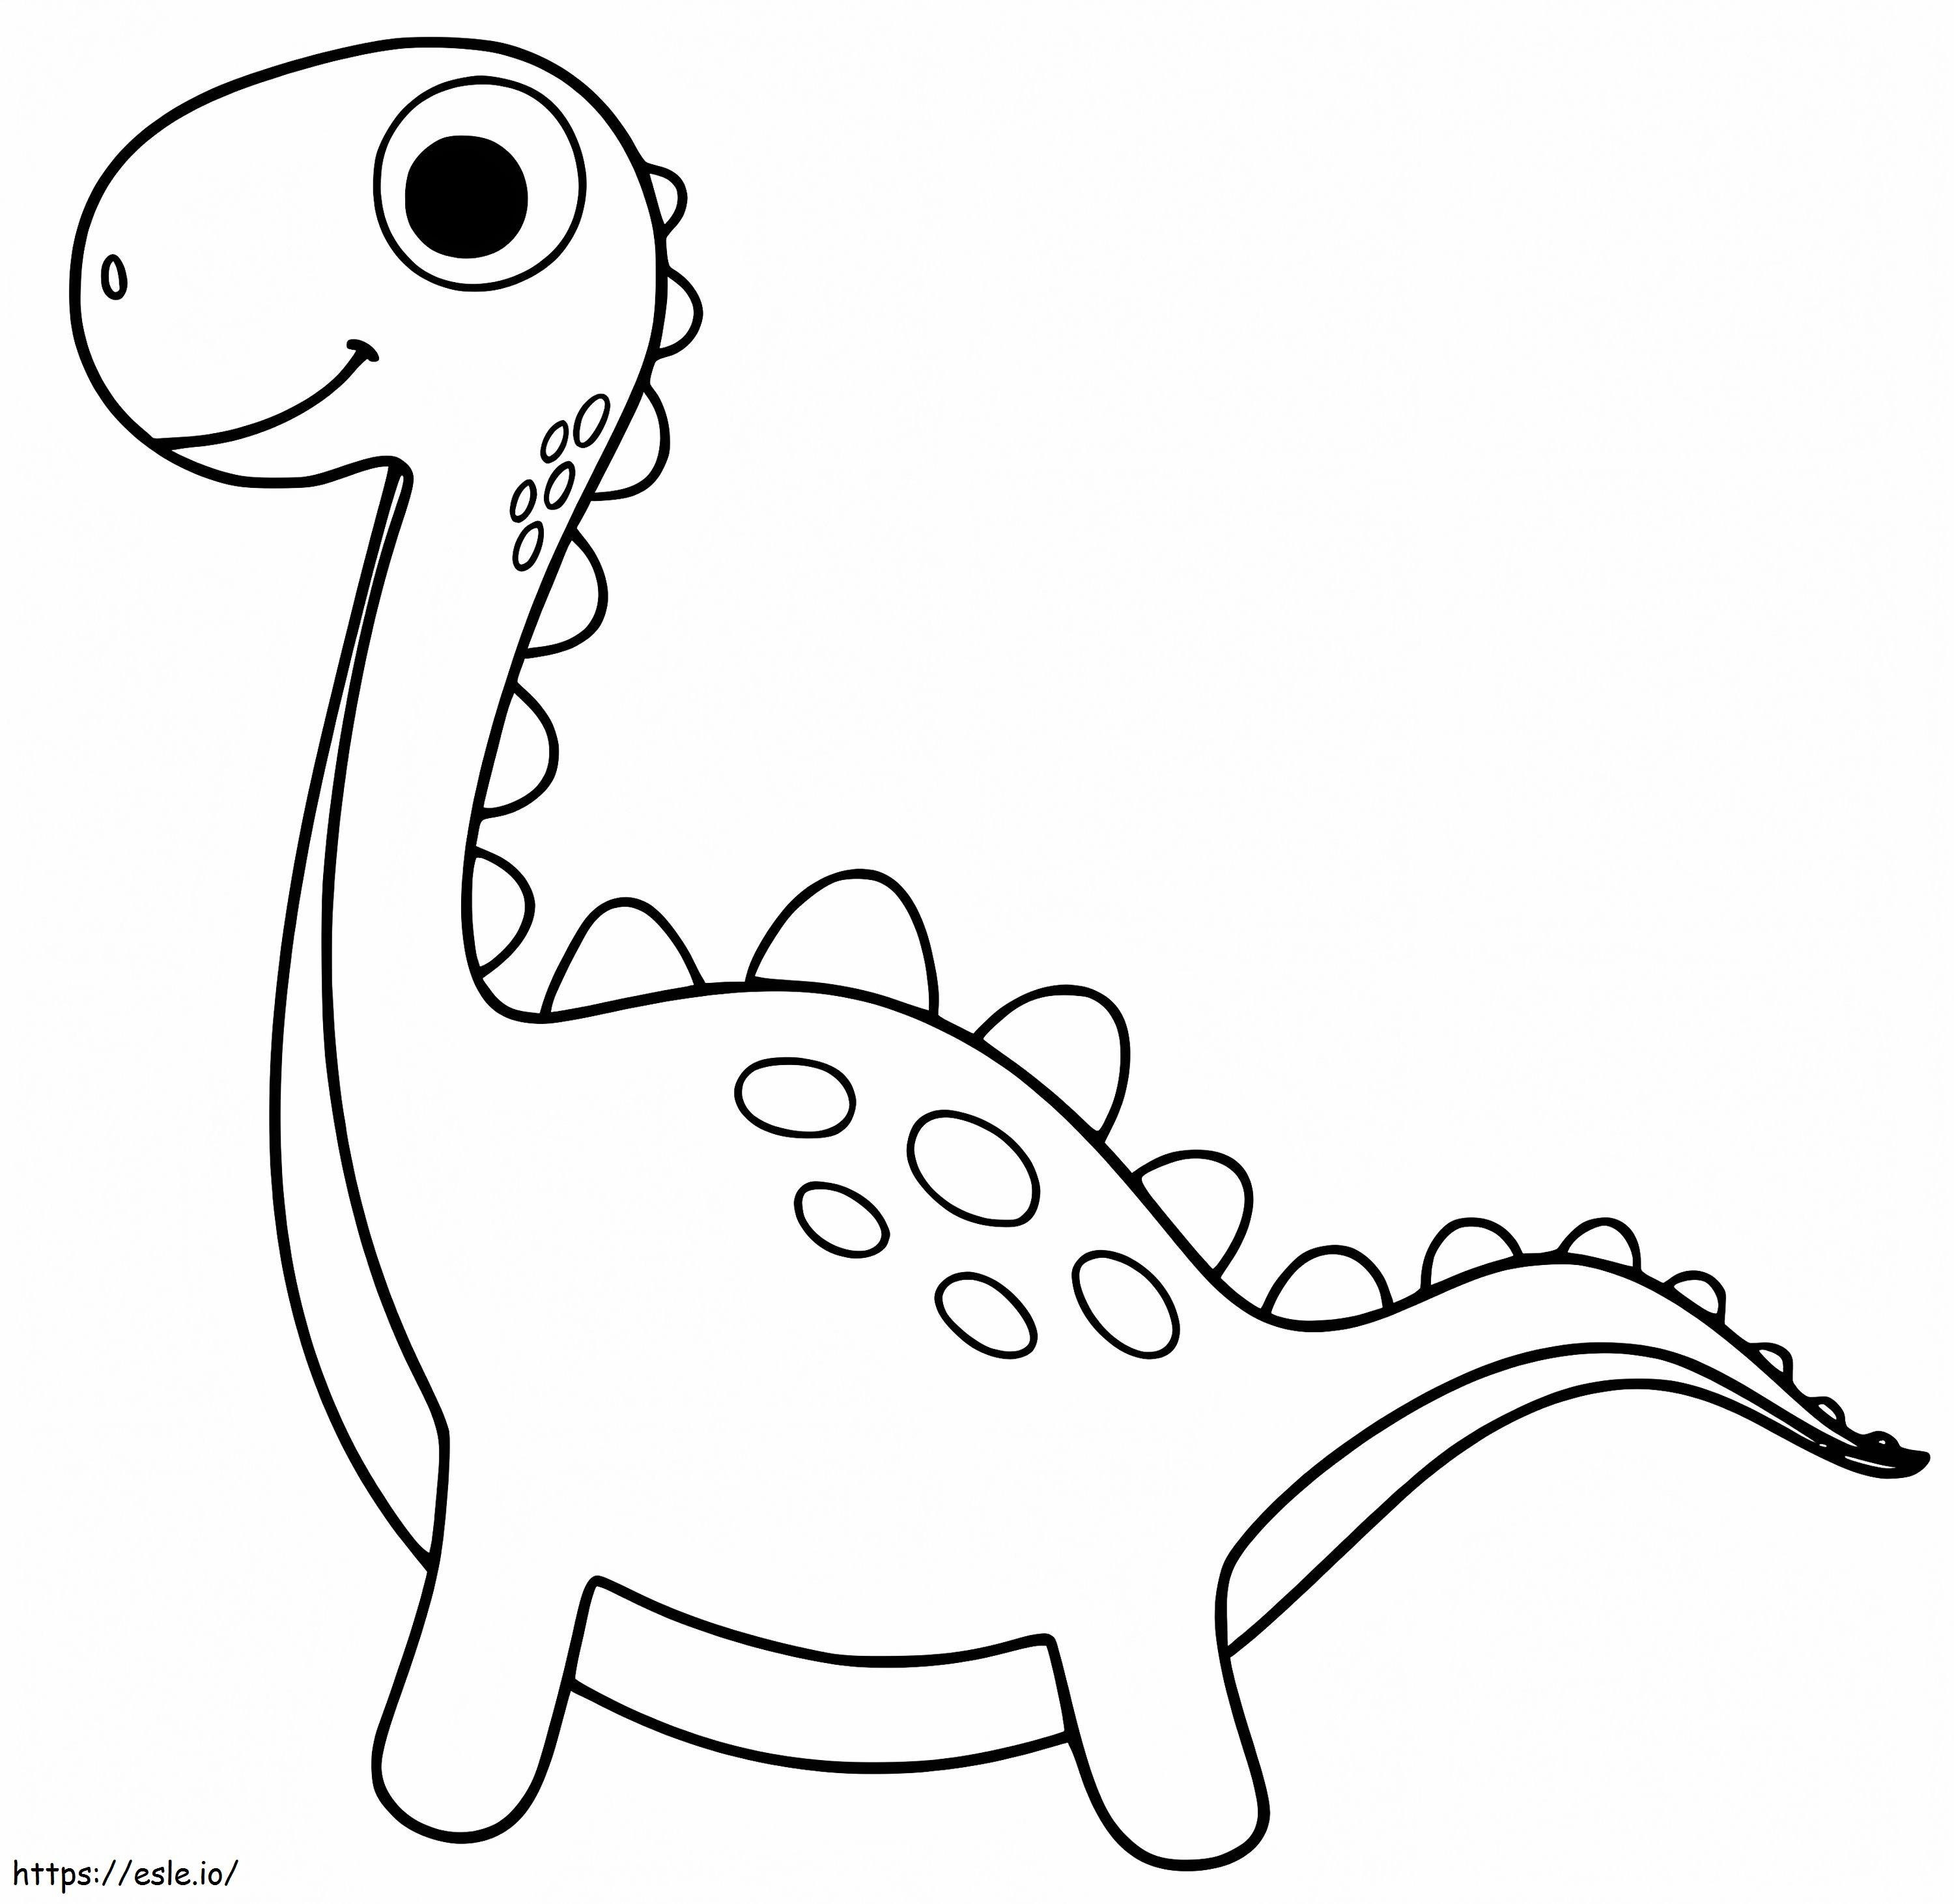 Dinossauro fácil para colorir